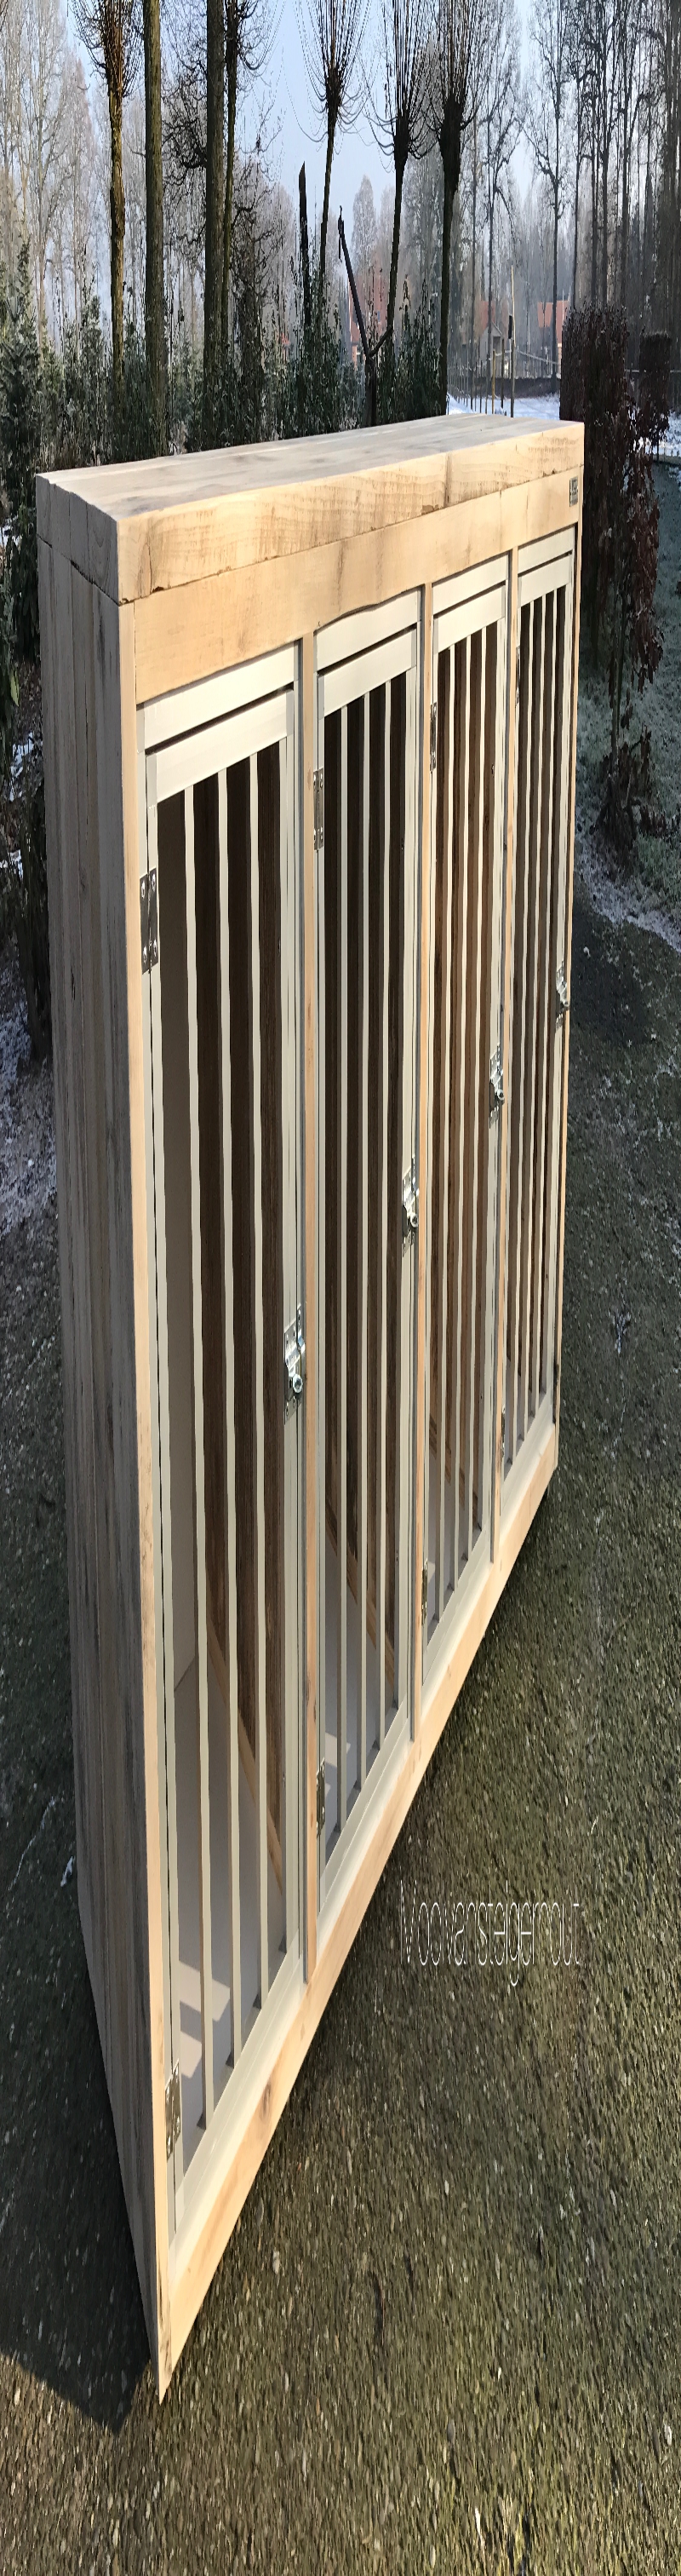 bench kamerkennel van steigerhout